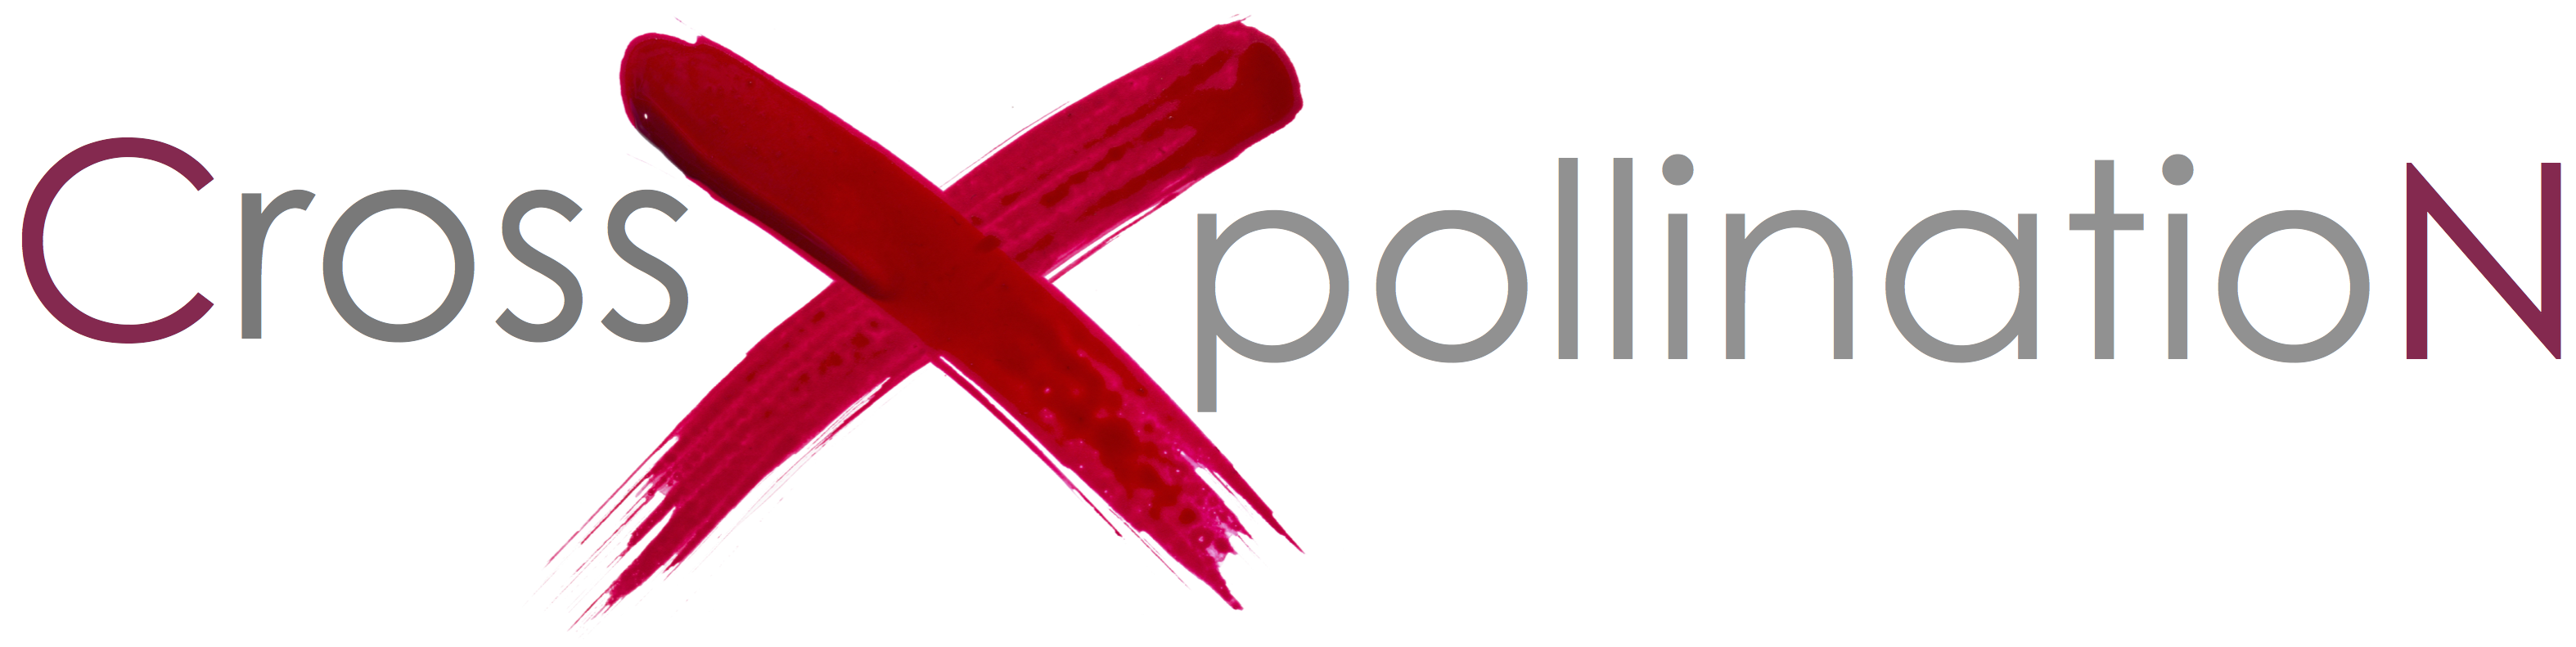 CrossXpollinatioN logo